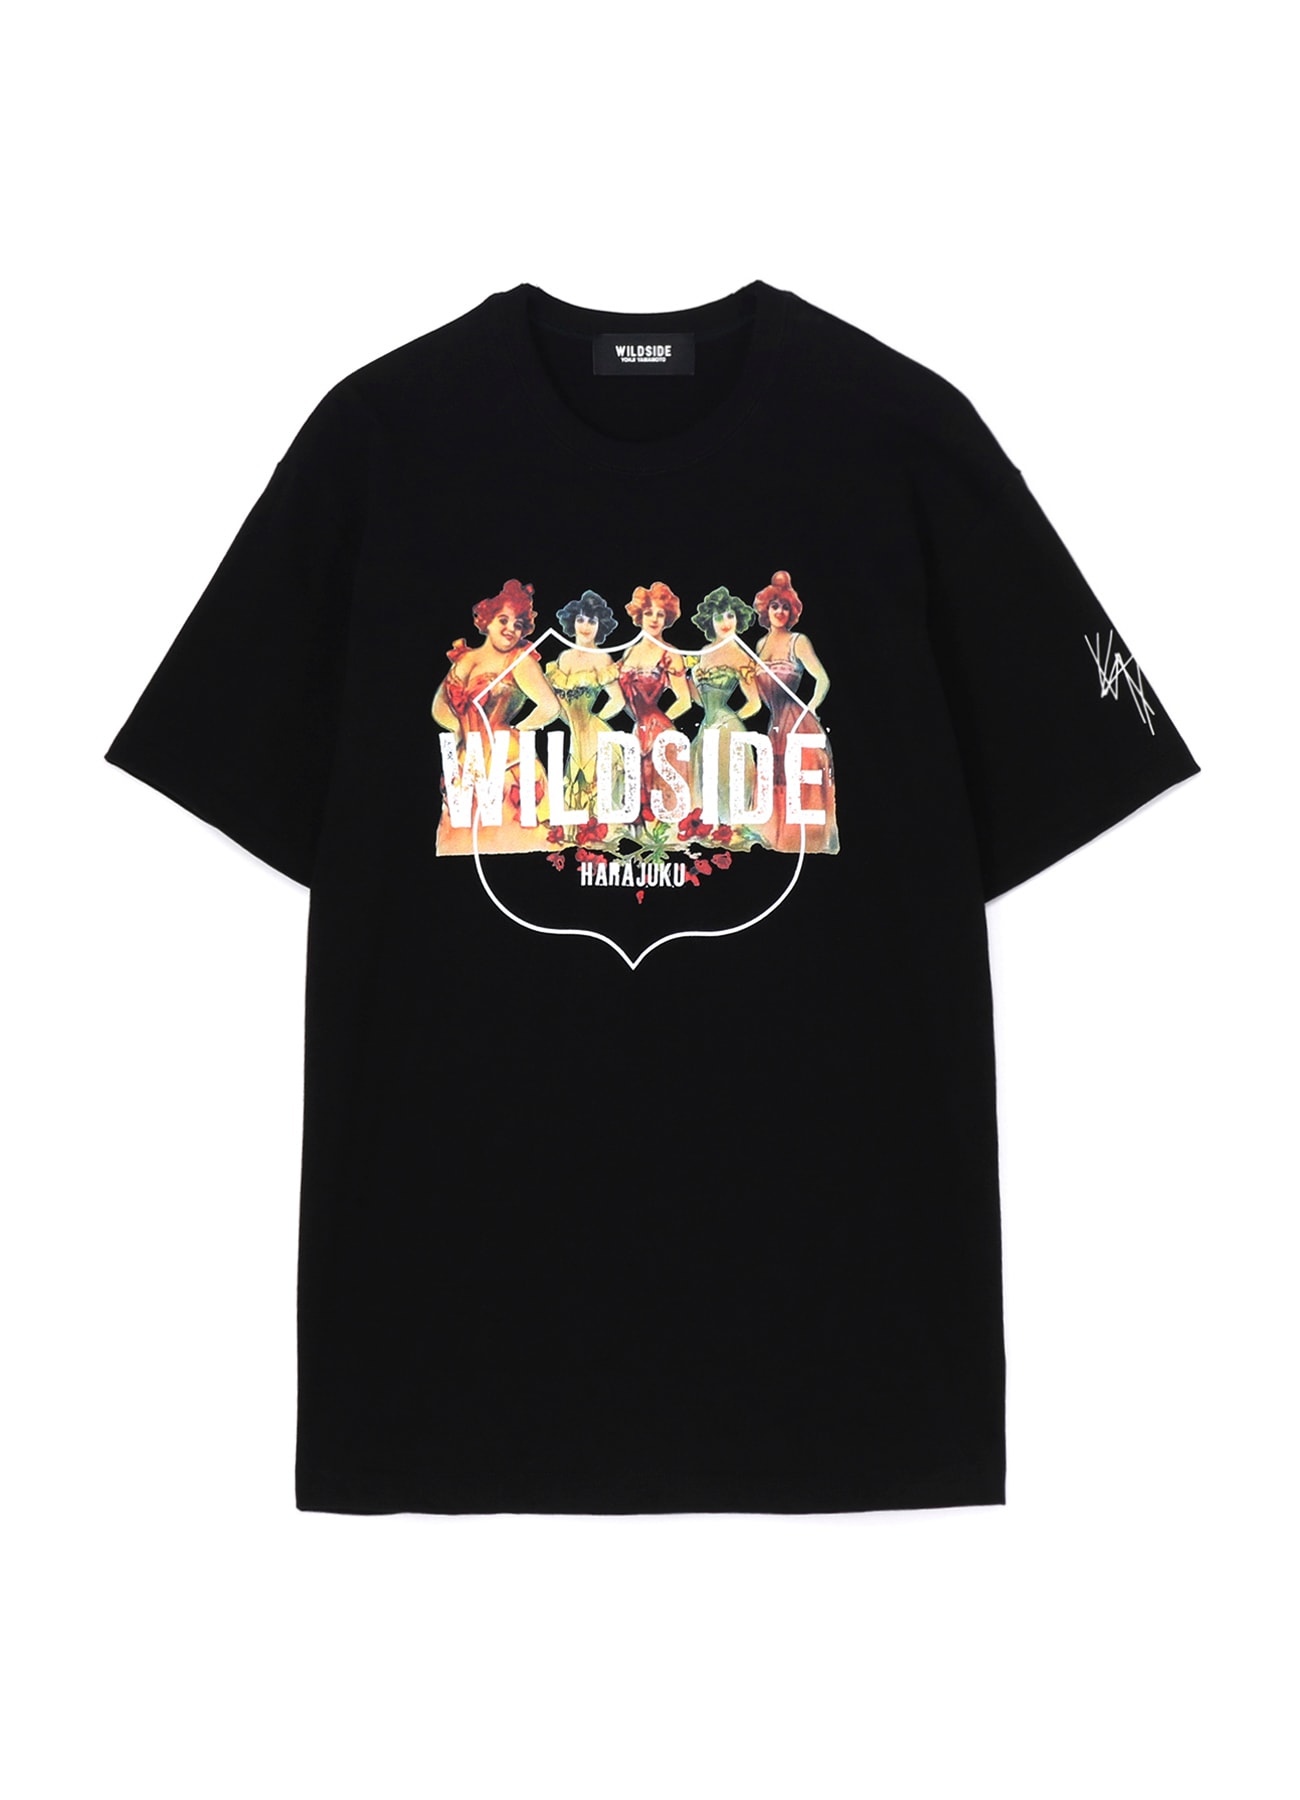 【5/15 12:00 release】HARAJUKU Show Girl SS T-shirt